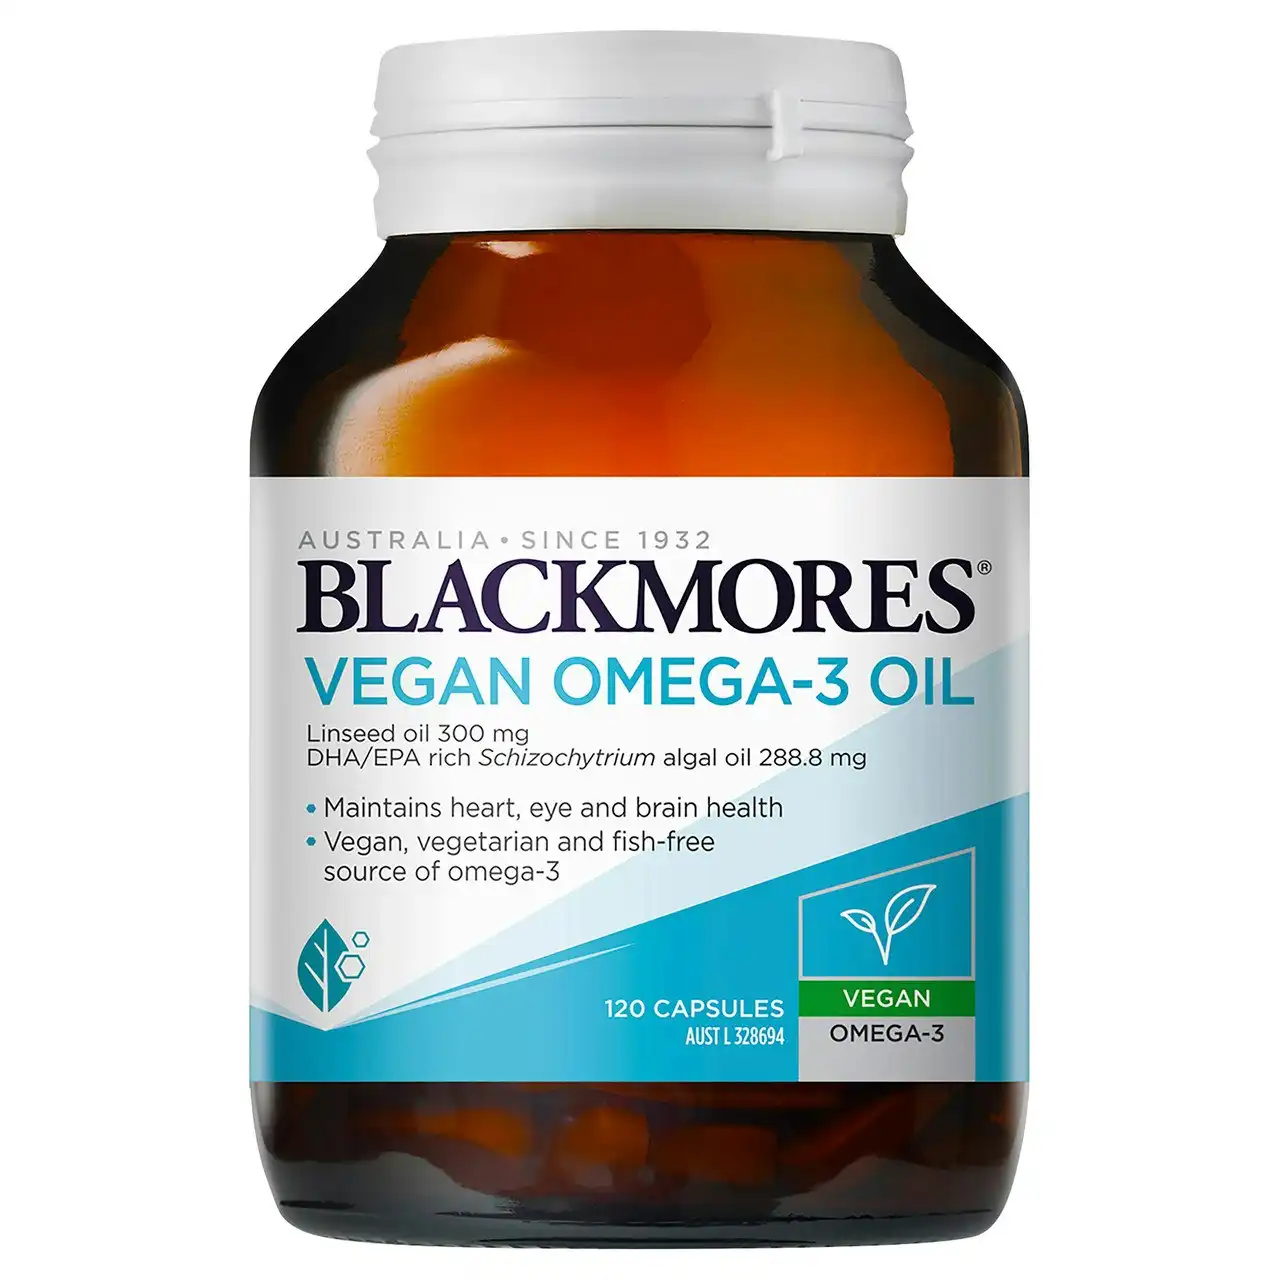 Blackmores Vegan Omega-3 Oil 120 Capsules